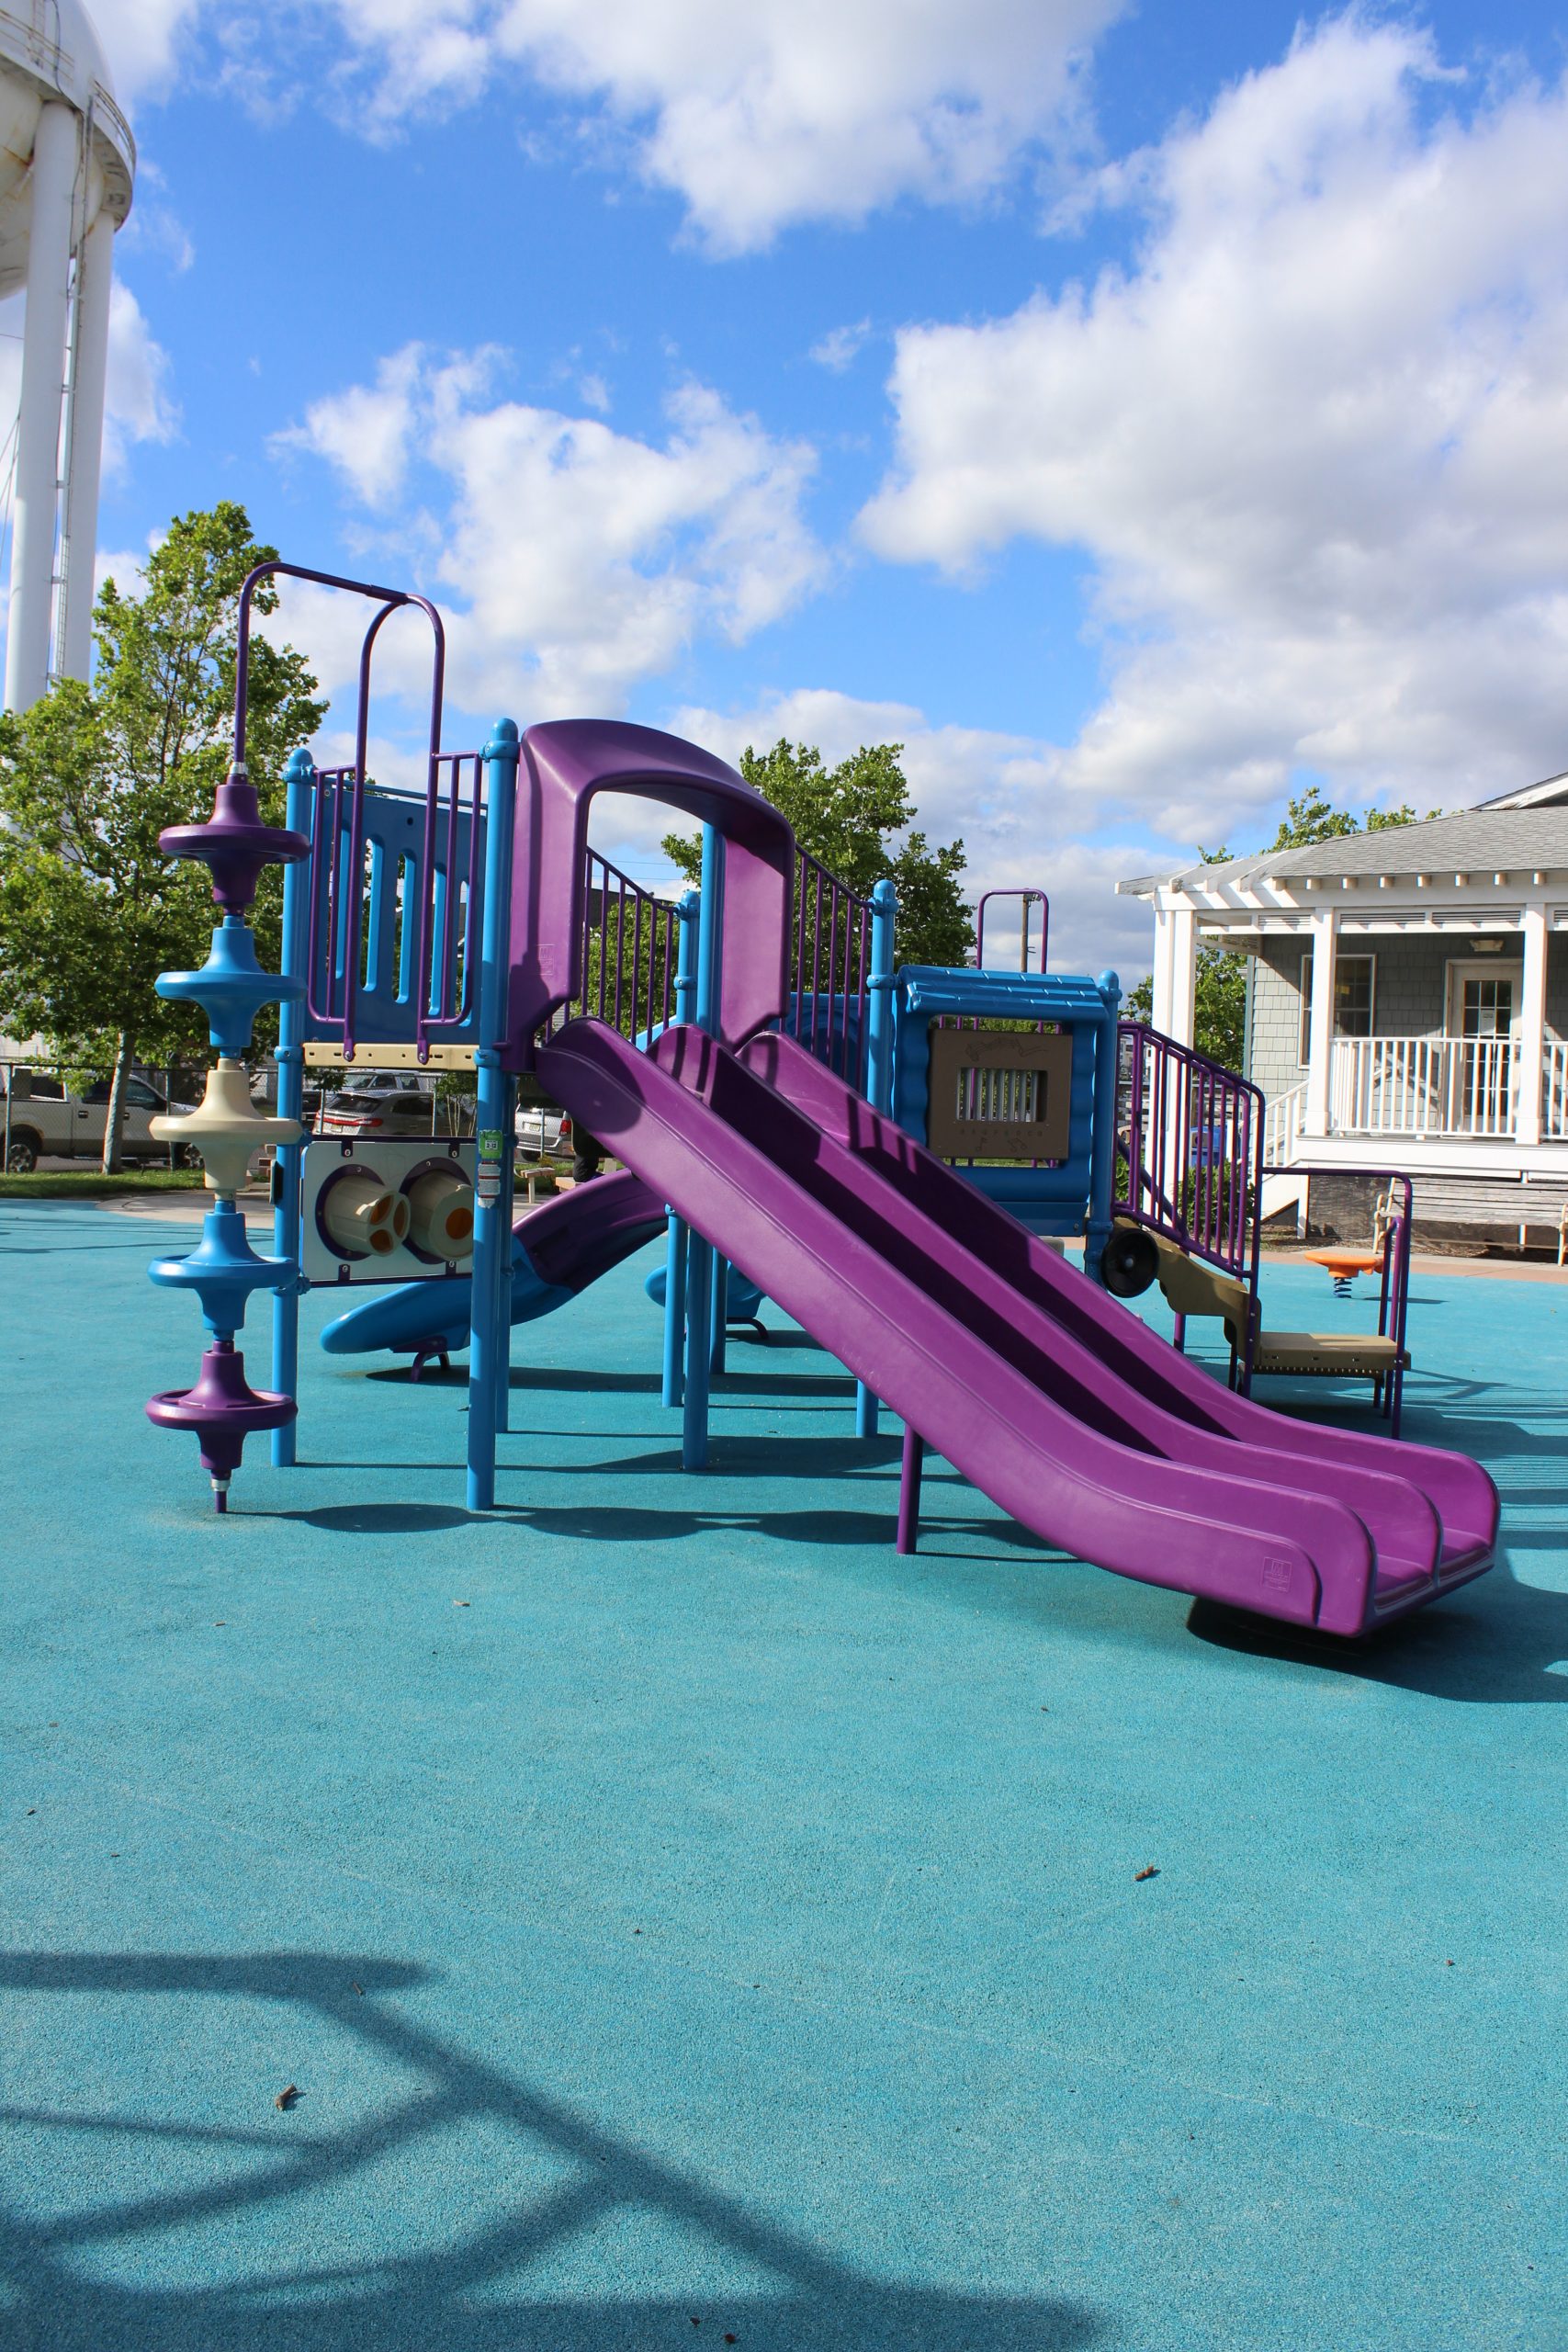 Ocean City 8th Street Playground in Ocean City NJ 2 side by side slides